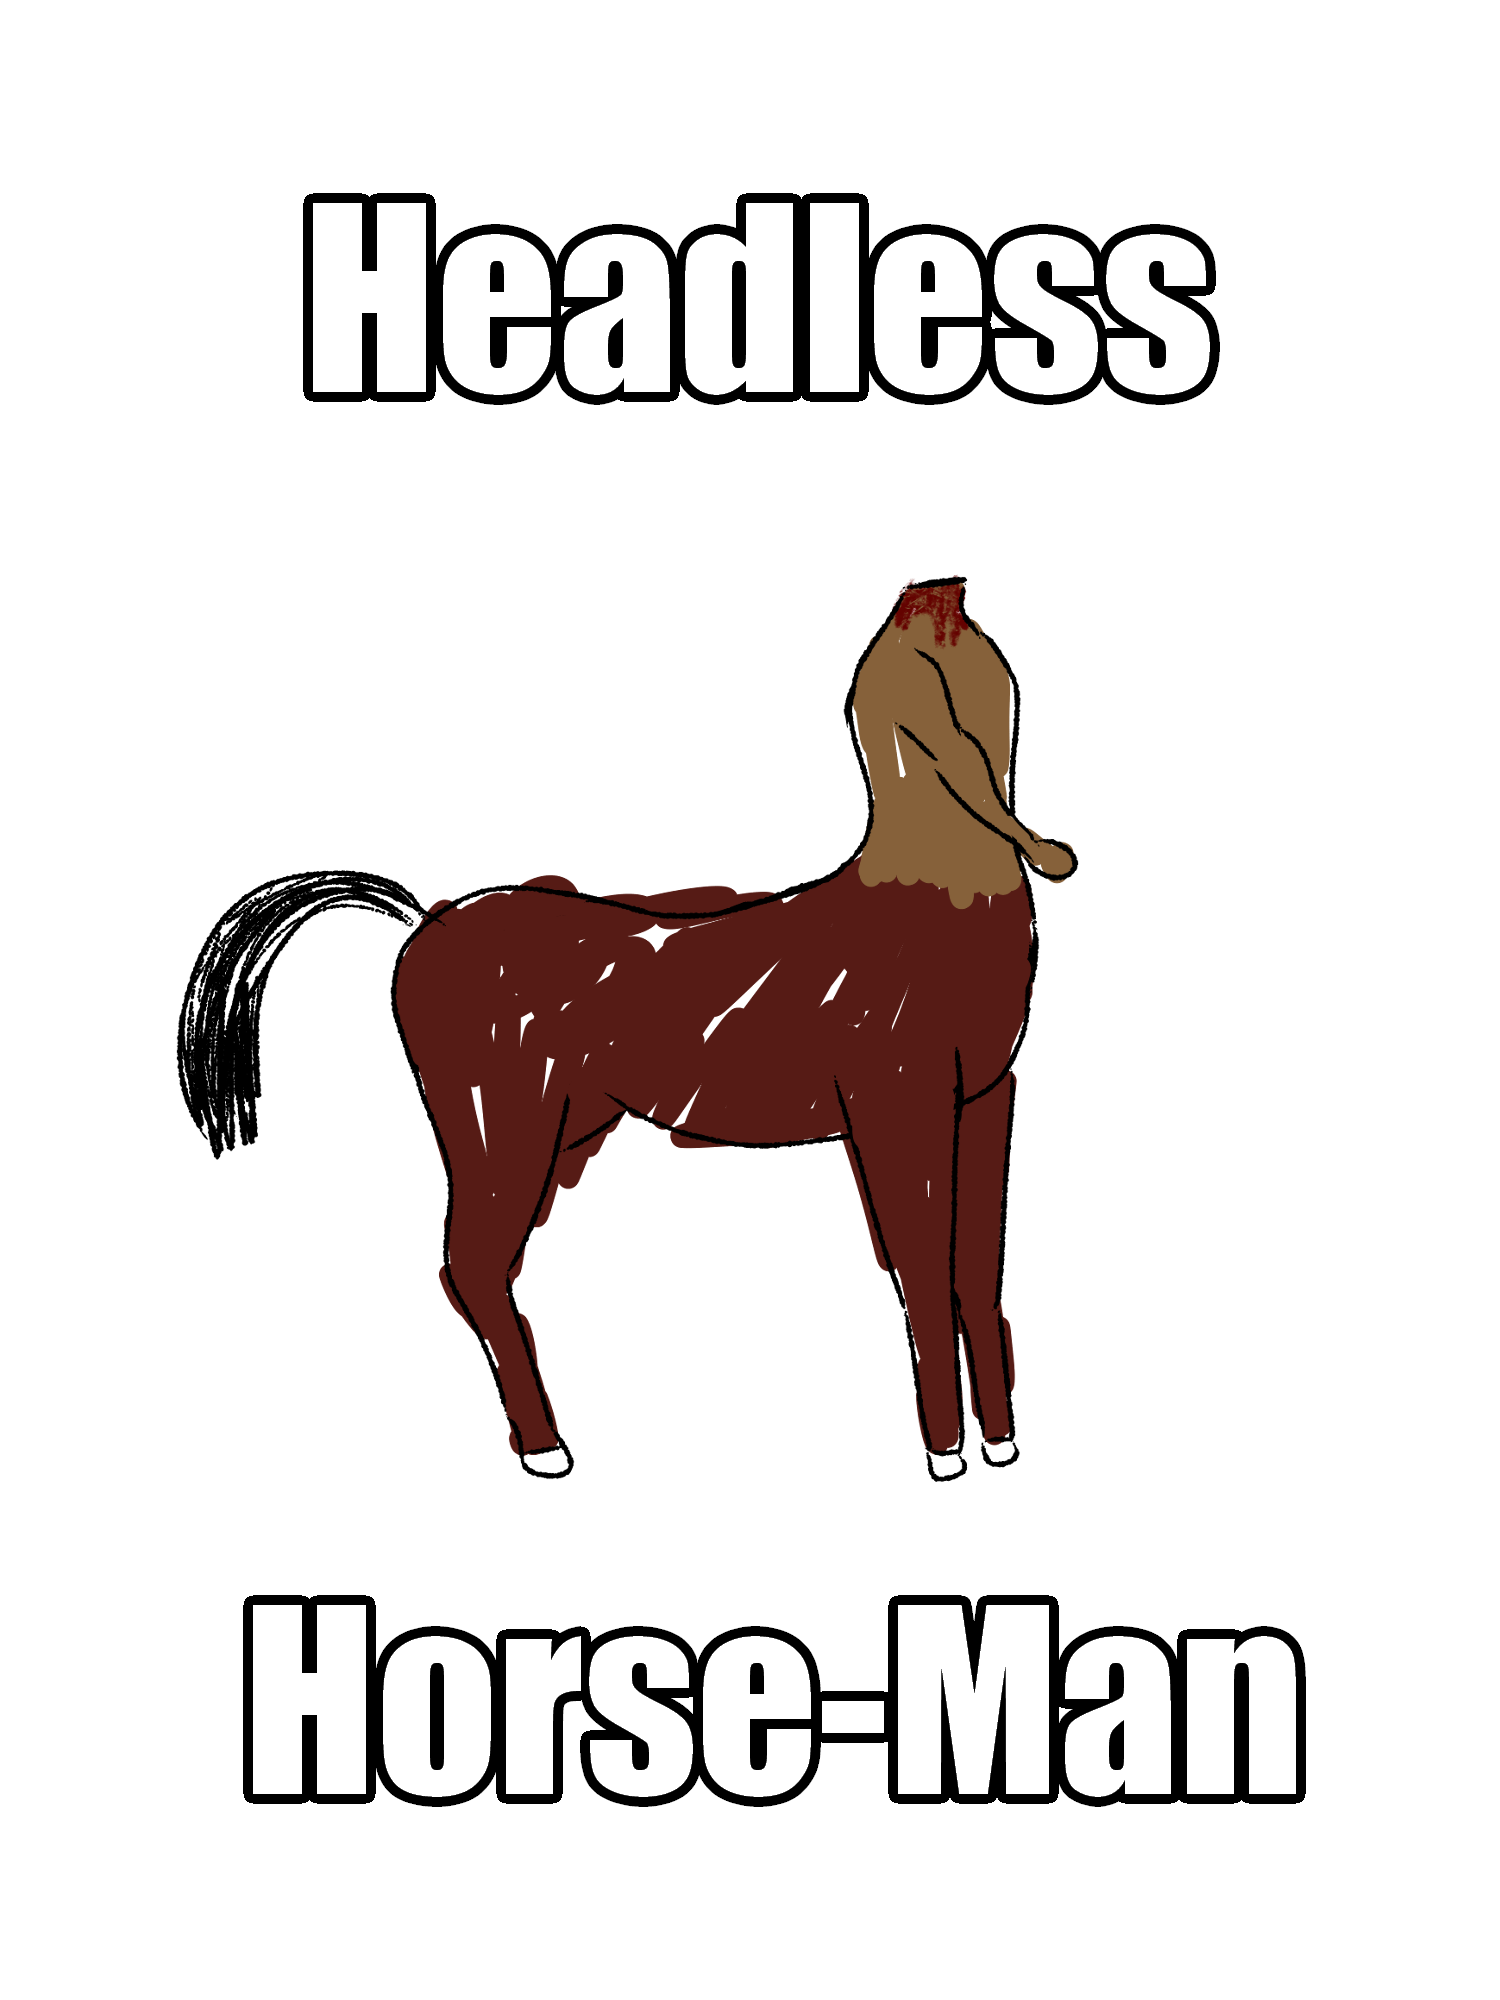 A badly drawn meme of a centaur with a bleeding neck stump. The text says 'headless horse-man', hyphenated.